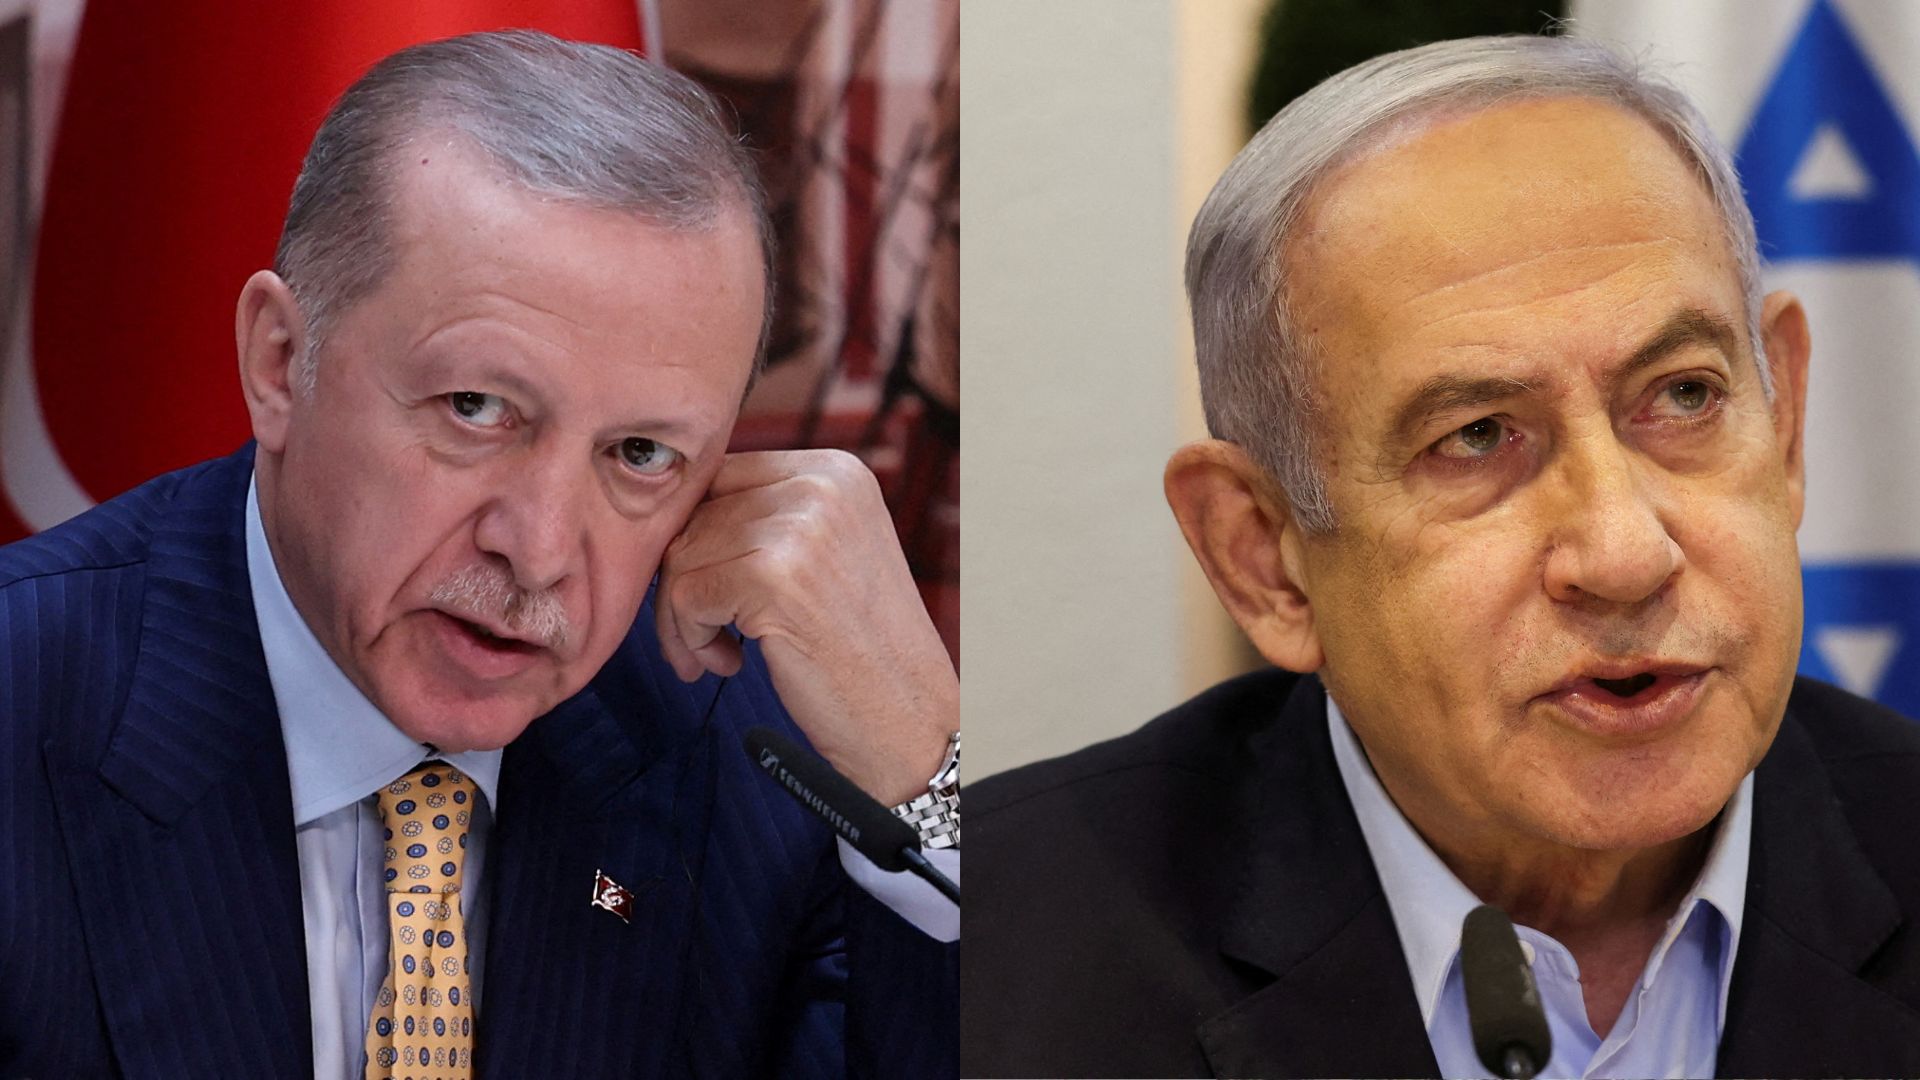 A sanctions row is developing between the countries of Turkish President Tayyip Erdogan (L) and Israeli Prime Minister Benjamin Netanyahu./Umit Bektas, Ronen Zvulun/Reuters